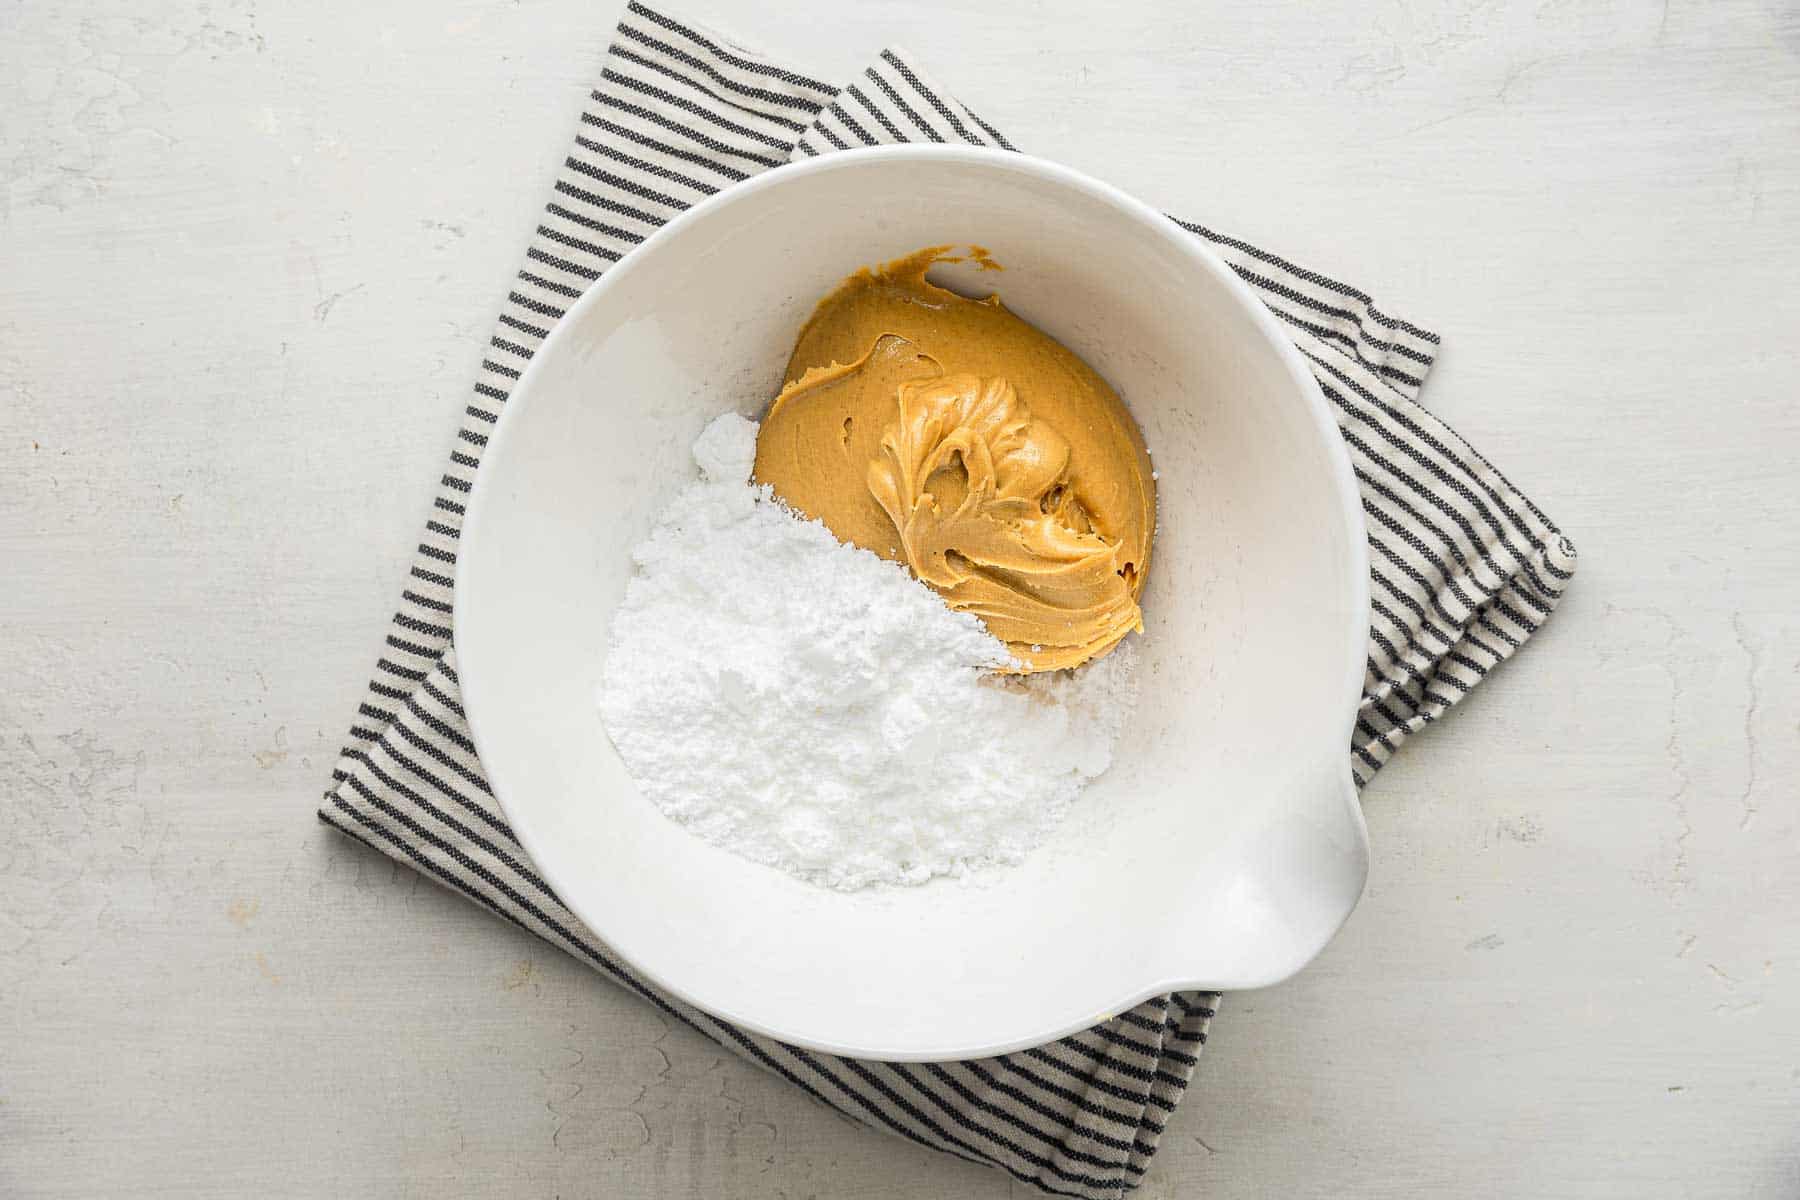 Creamy 2-Ingredient Homemade Peanut Butter